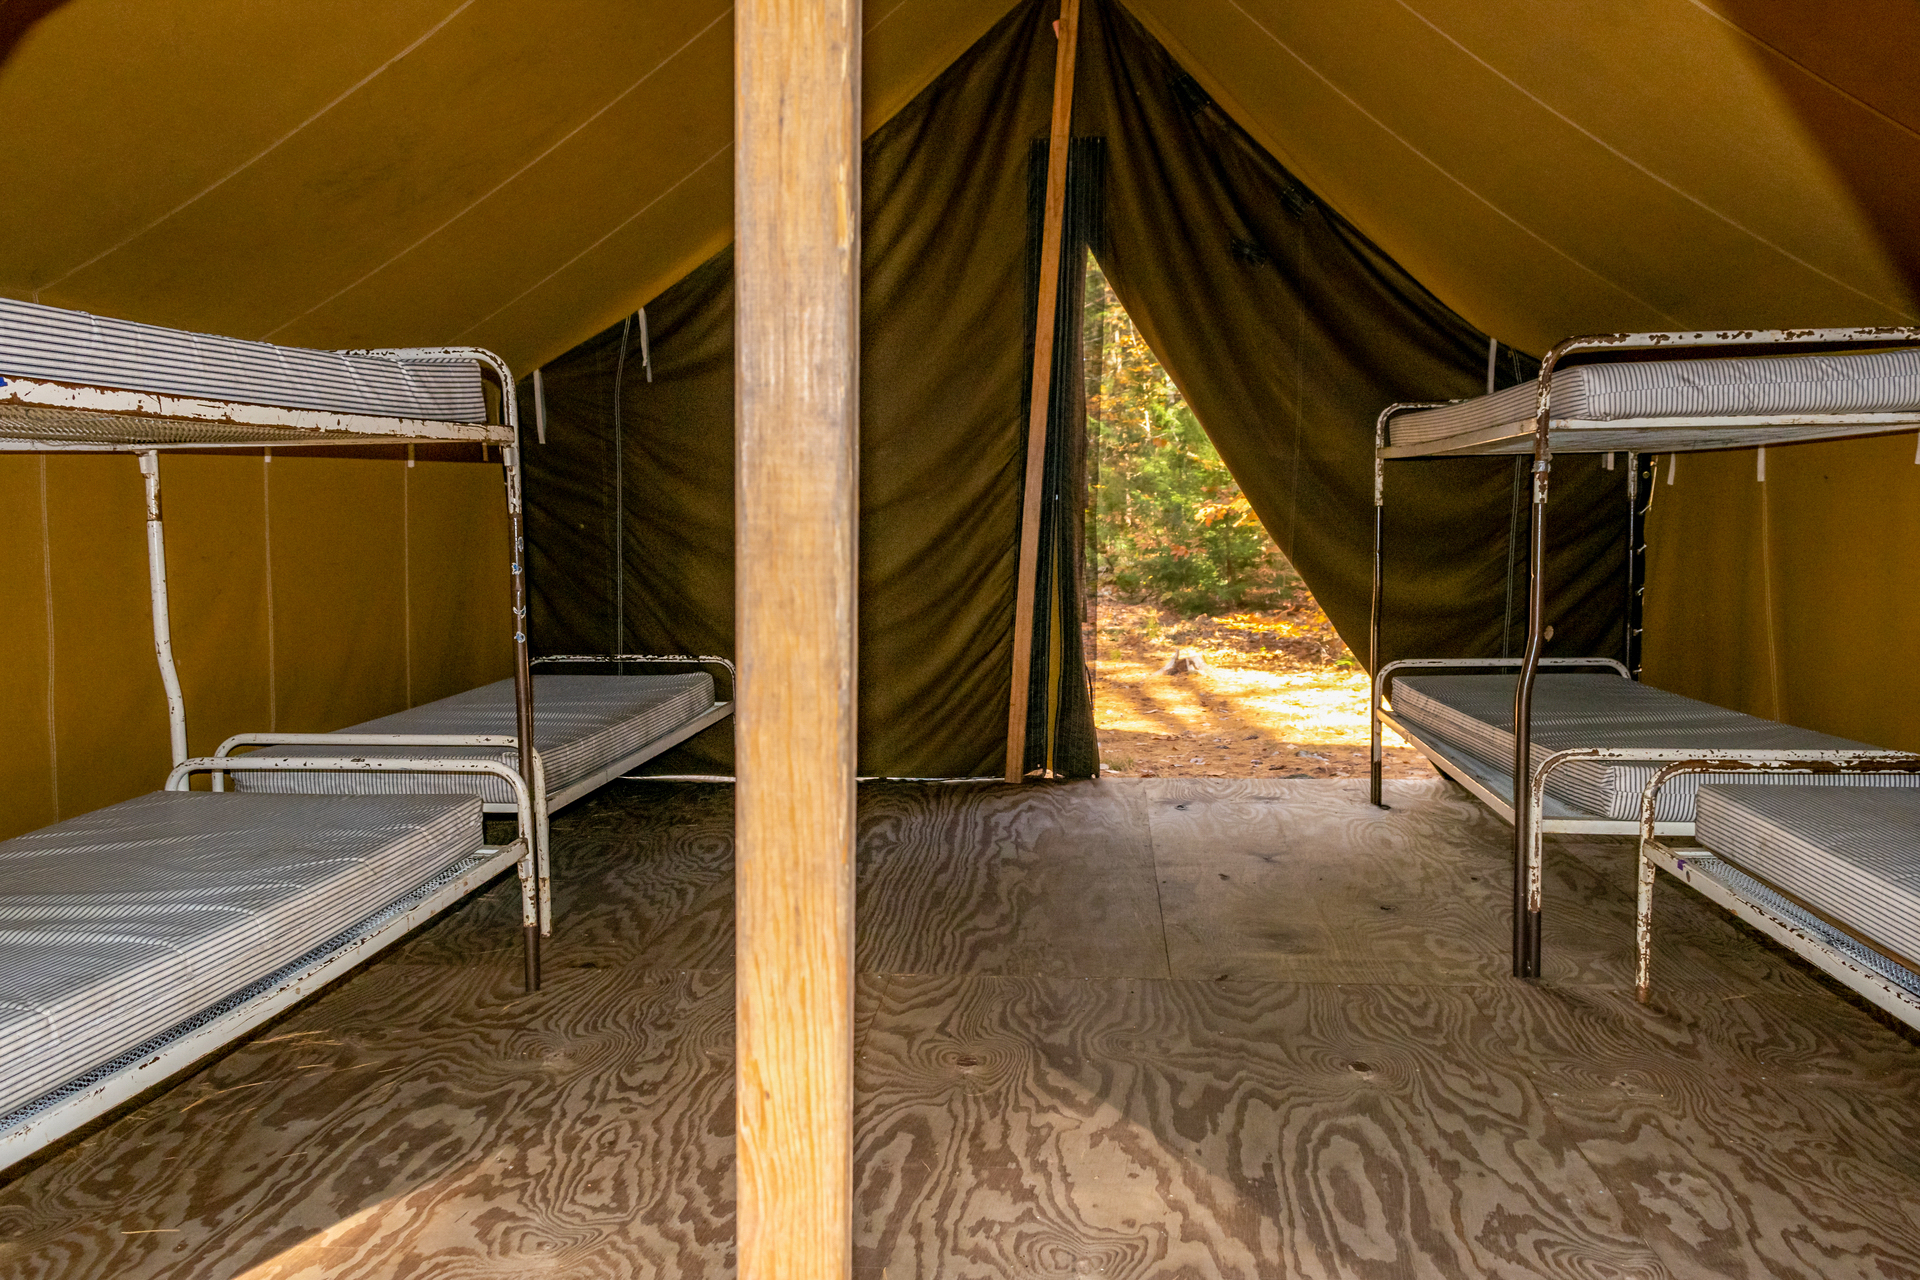 Interior of a platform tent at Wildwood Camp with steel bunk beds